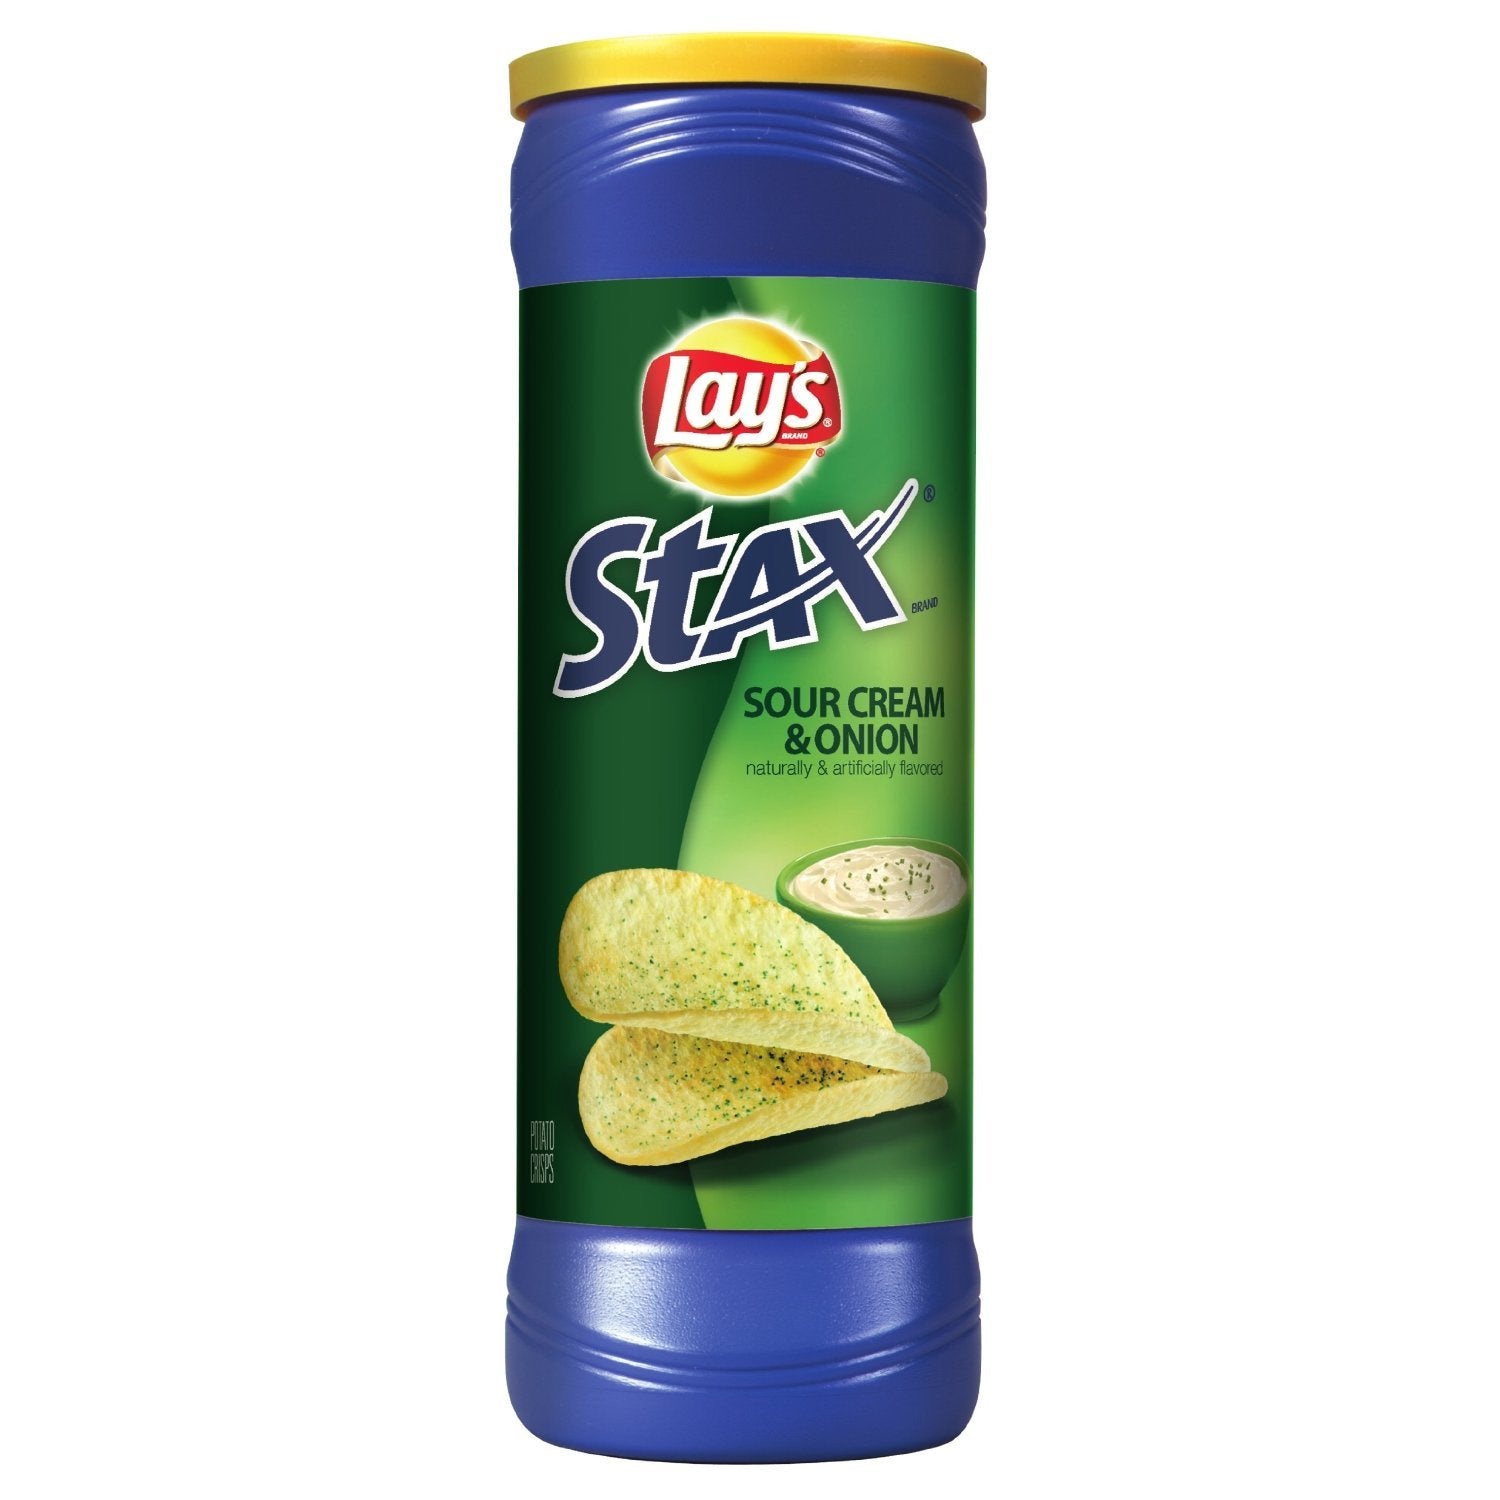 LAY'S Stax Sour Cream & Onion 5.5 oz